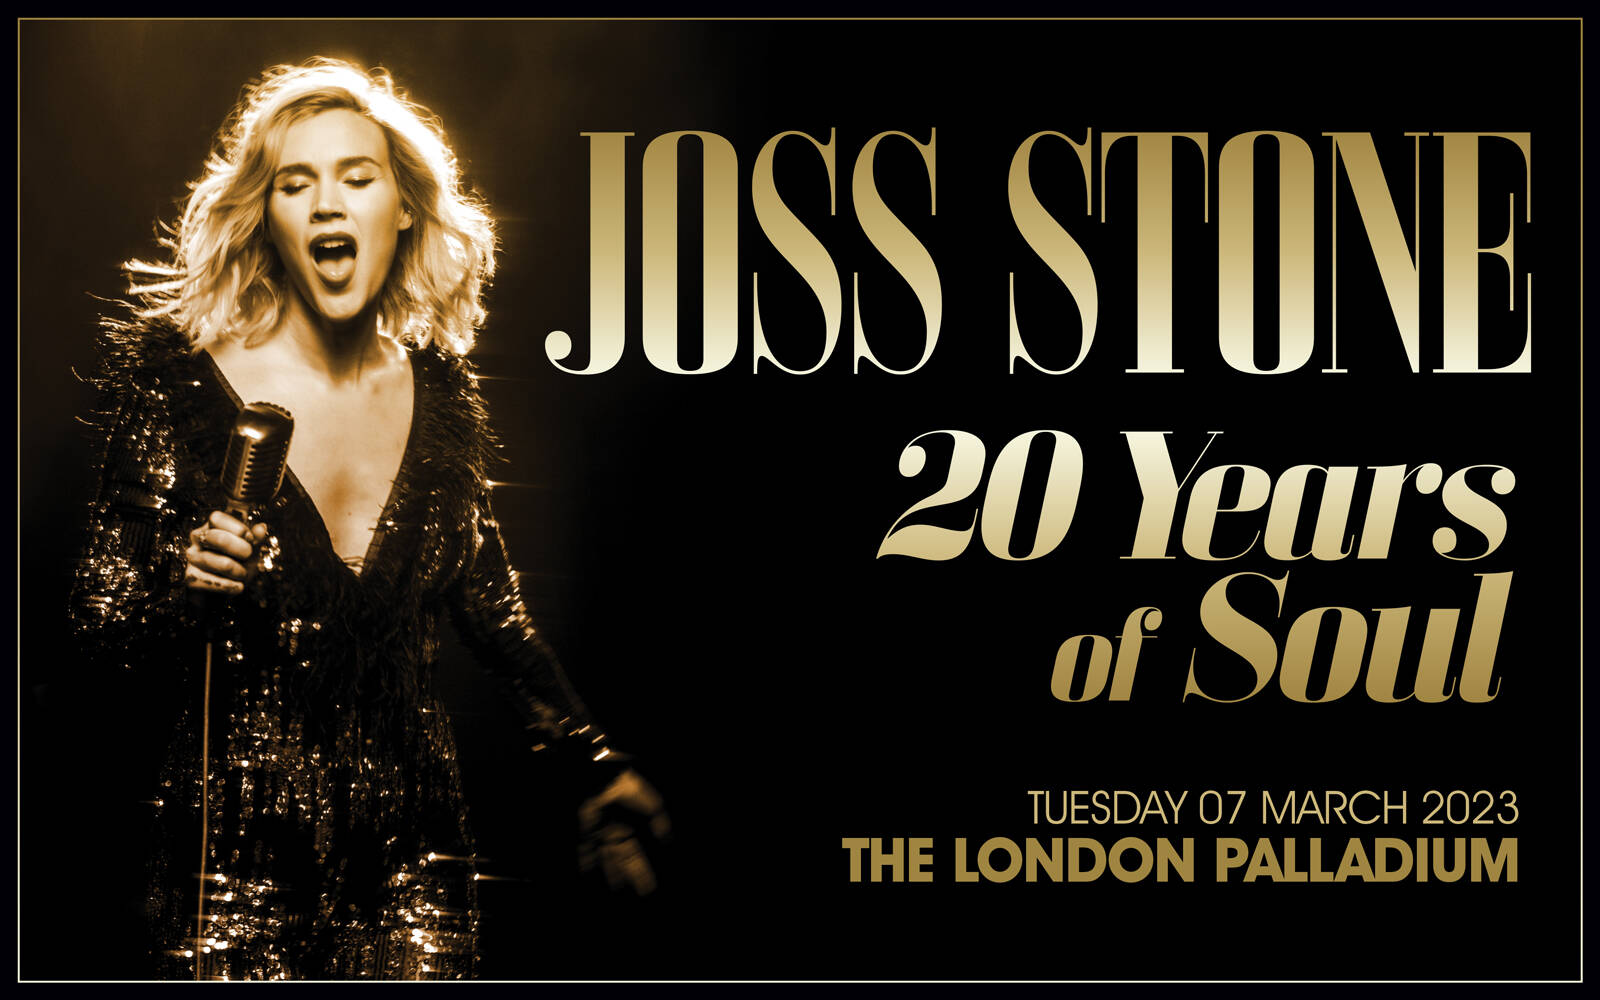 Joss Stone Greatest Hits Full Album 2022-Joss Stone Best Songs 2022 